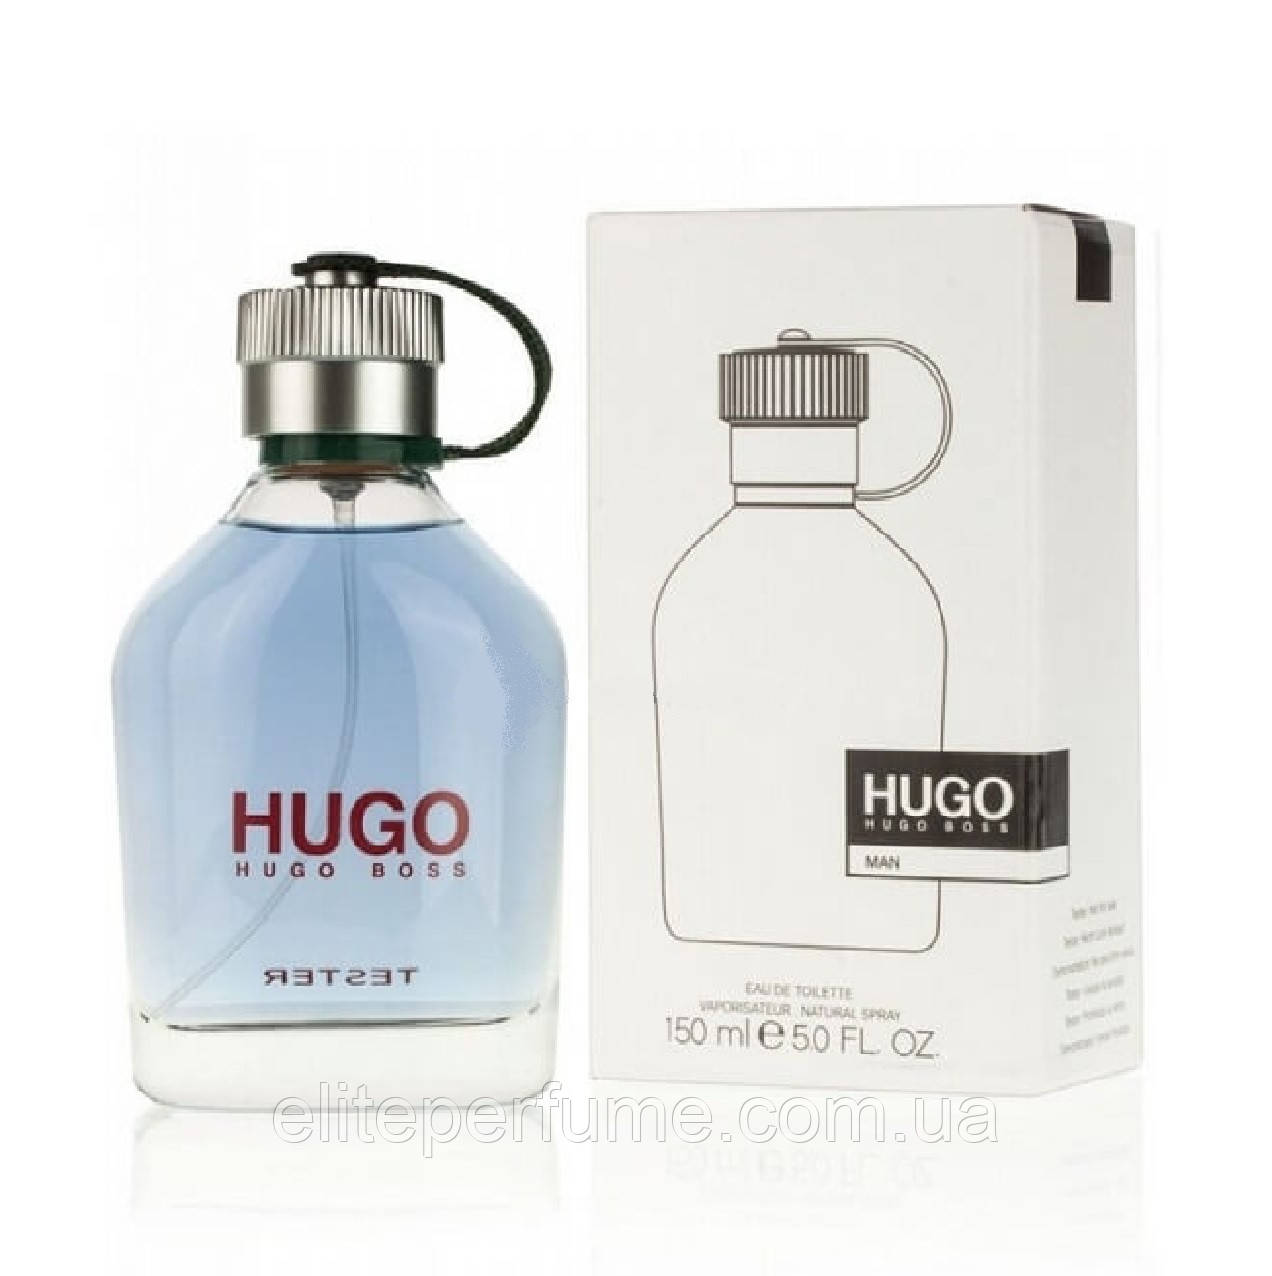 Hugo производитель. Hugo Boss Hugo men 100 мл. Hugo Boss Hugo man 150 мл. Тестер мужской Hugo Boss Hugo man 150 ml. Hugo Boss Hugo 100мл.